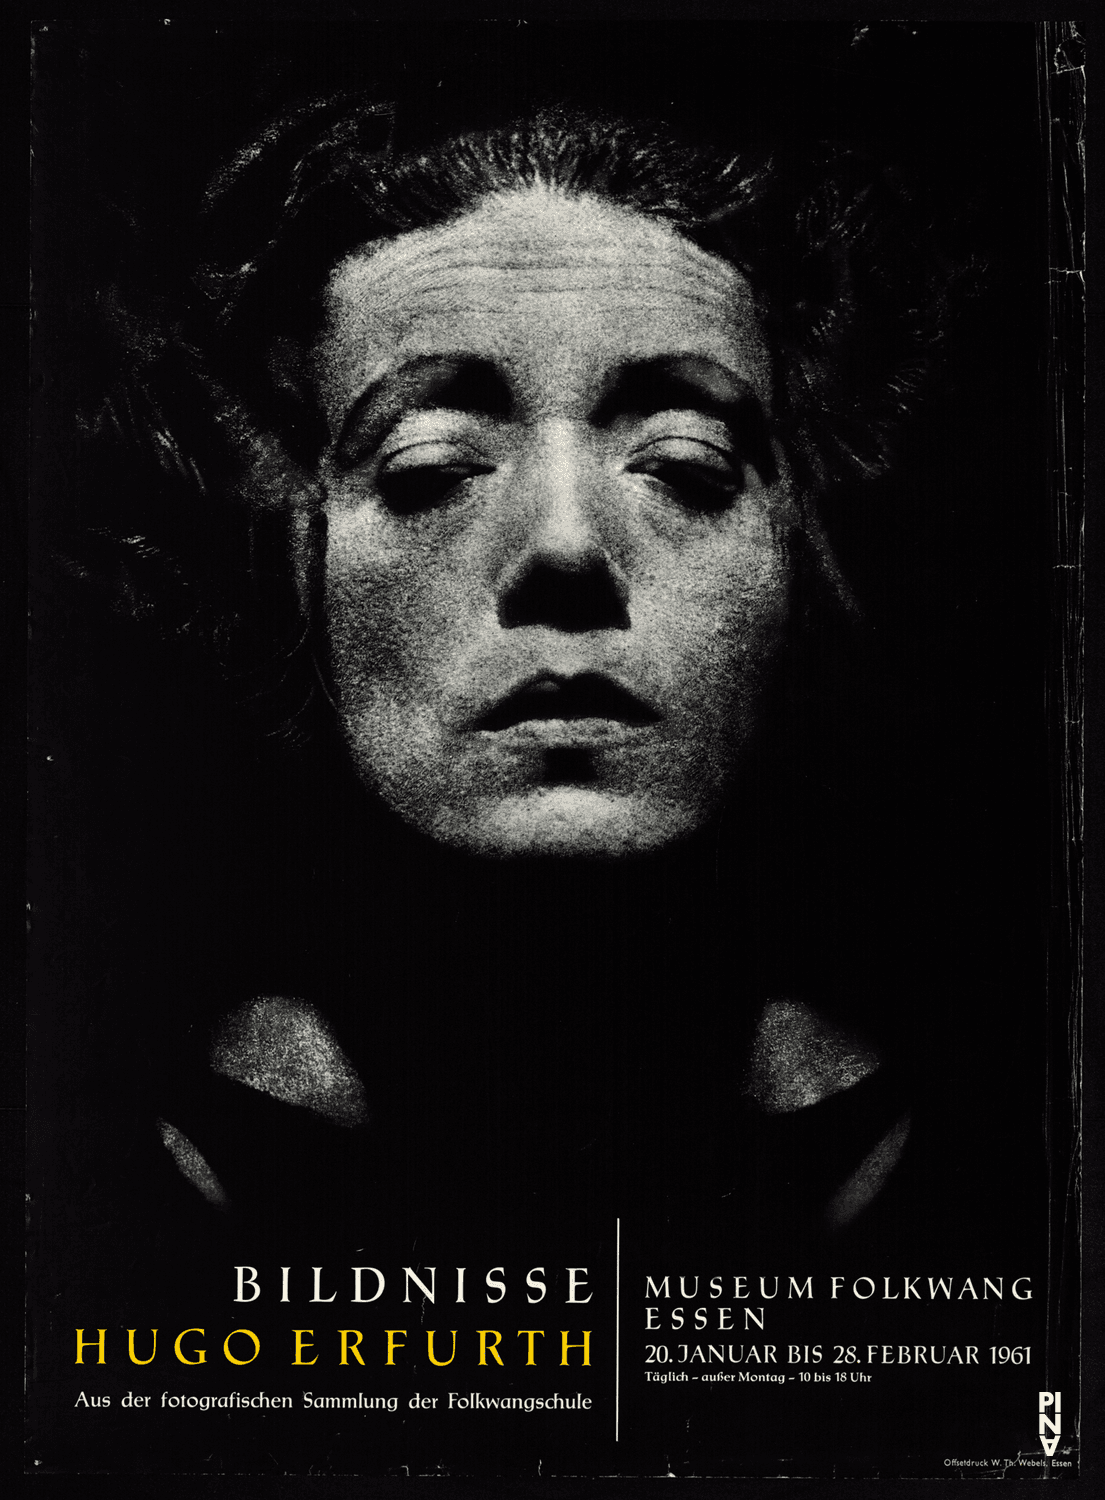 Poster (in Essen), 01/20/1961 – 02/28/1961